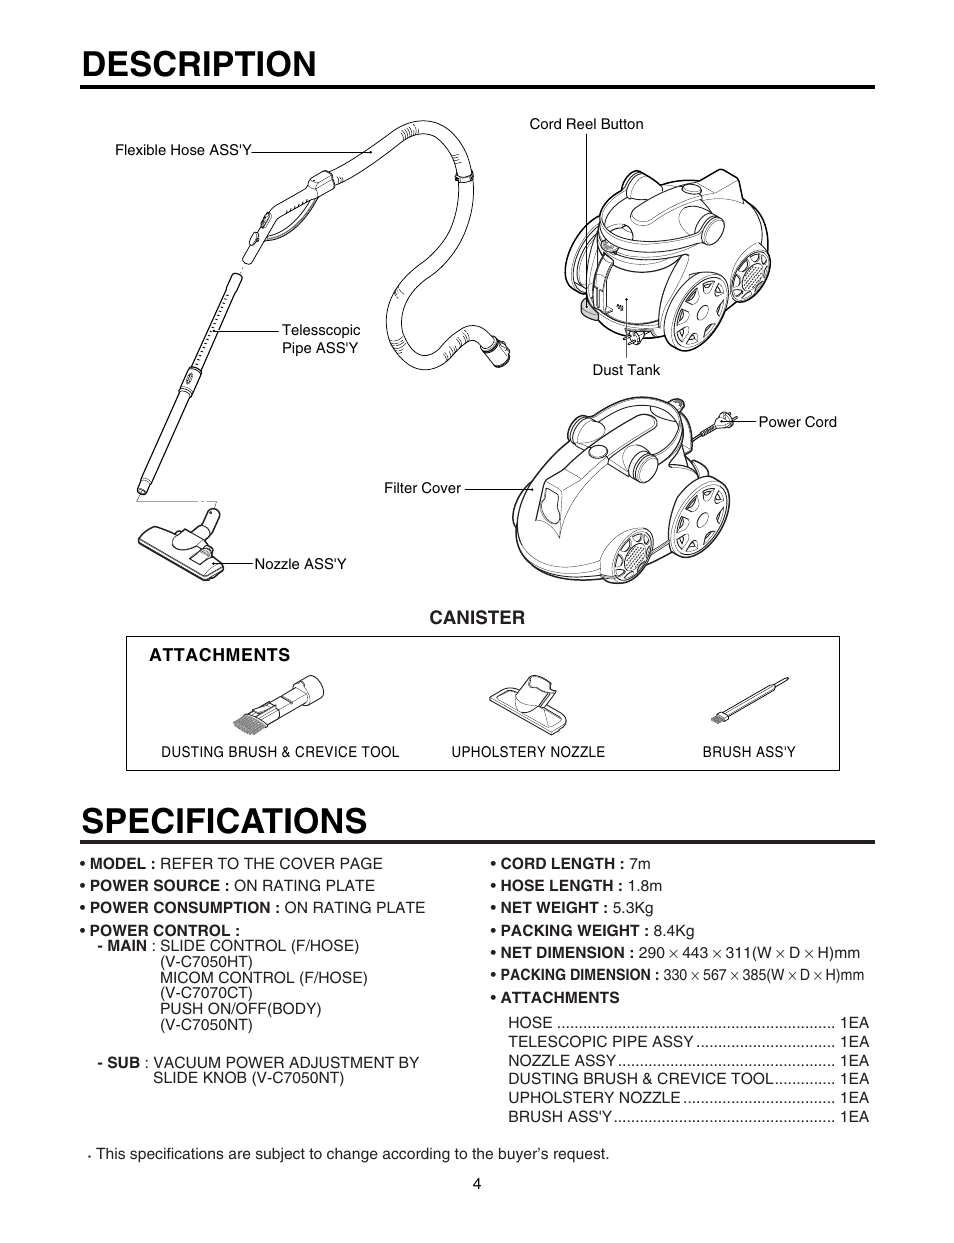 Description specifications | LG V-C7050HT User Manual | Page 4 / 23